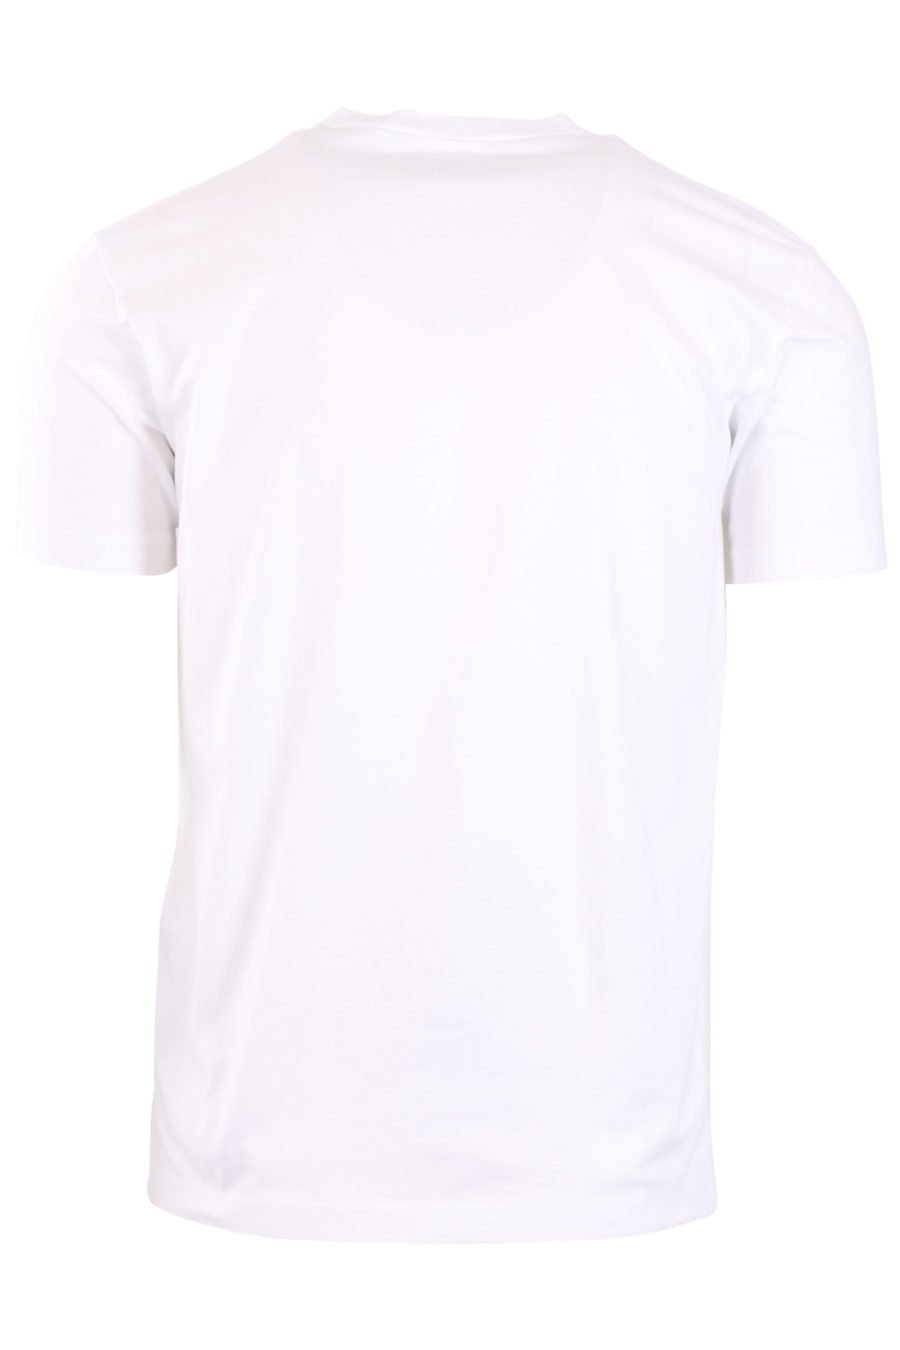 Camiseta blanca manga corta "Ceresio" - IMG 9277